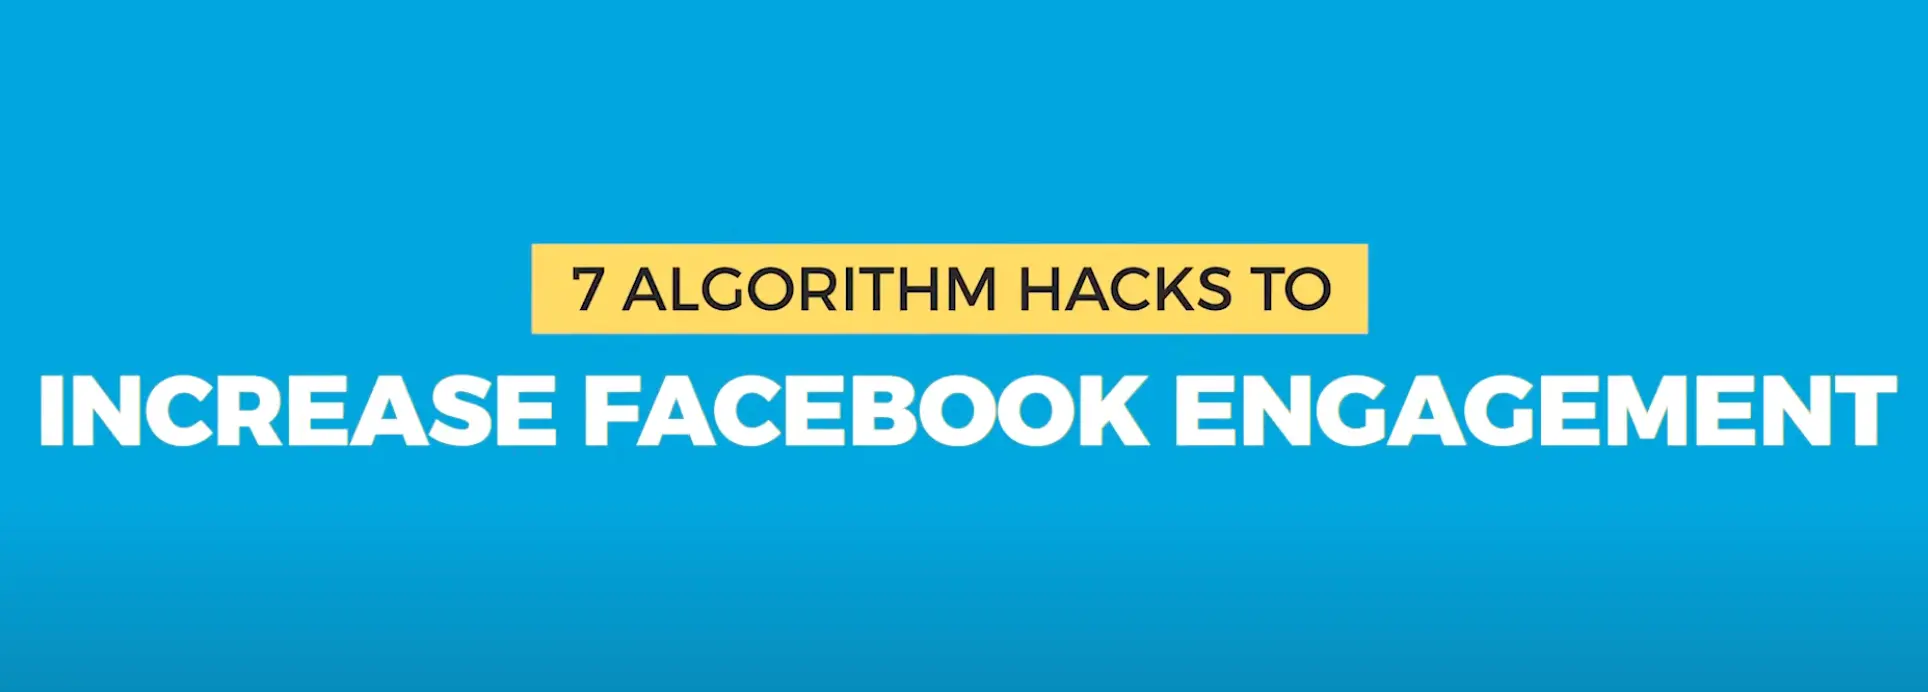 algorithm hacks for facebook marketing video tutorial